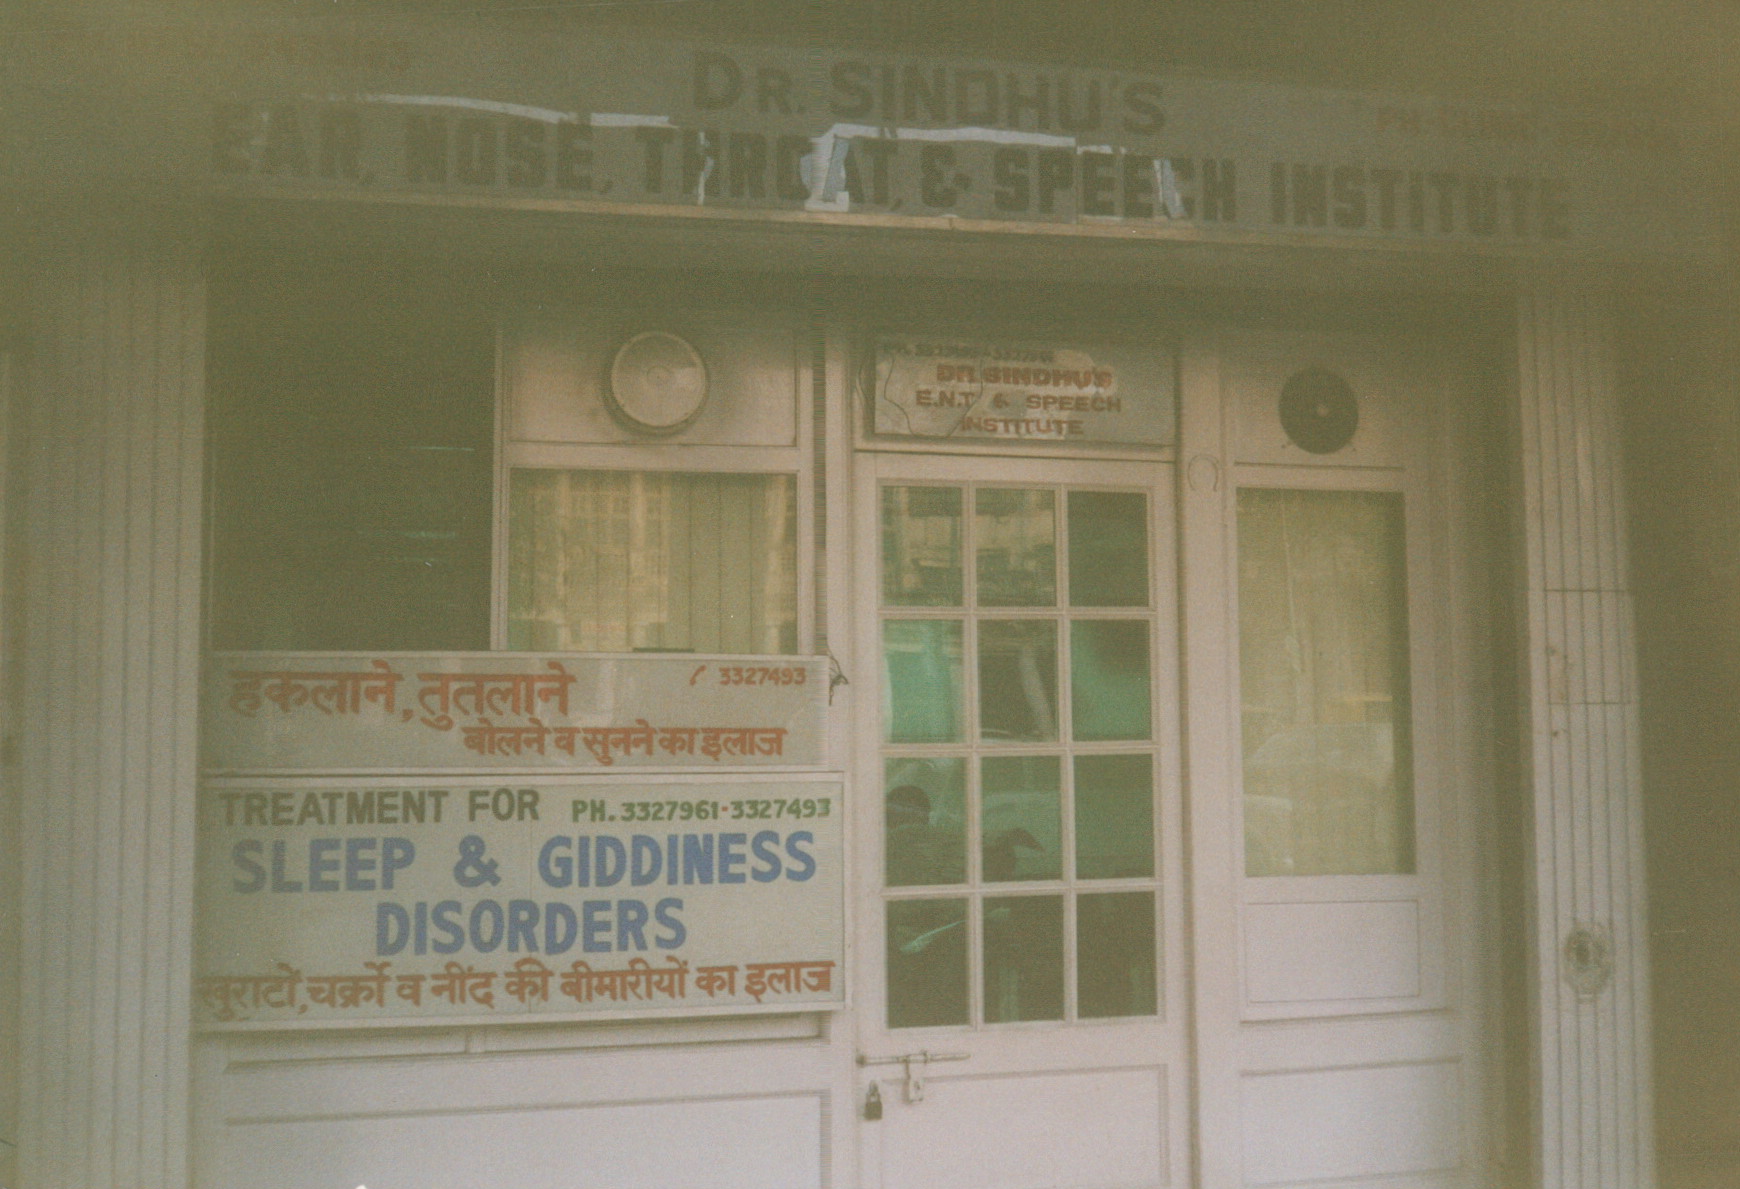 Sleep and Giddiness Disorders clinic India 1997